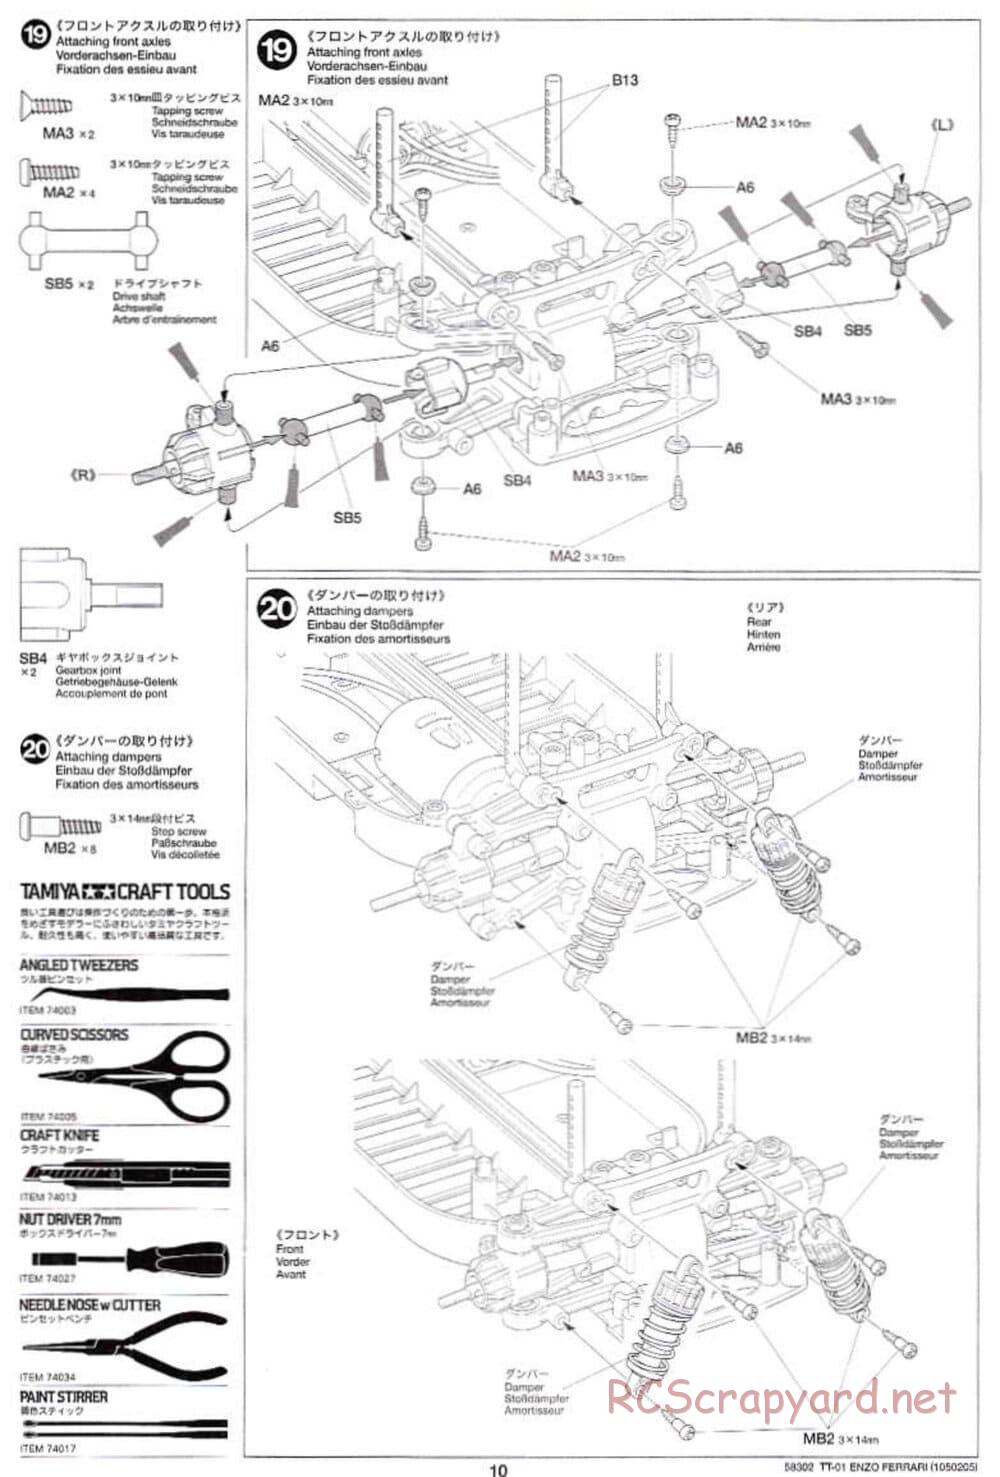 Tamiya - Enzo Ferrari - TT-01 Chassis - Manual - Page 10